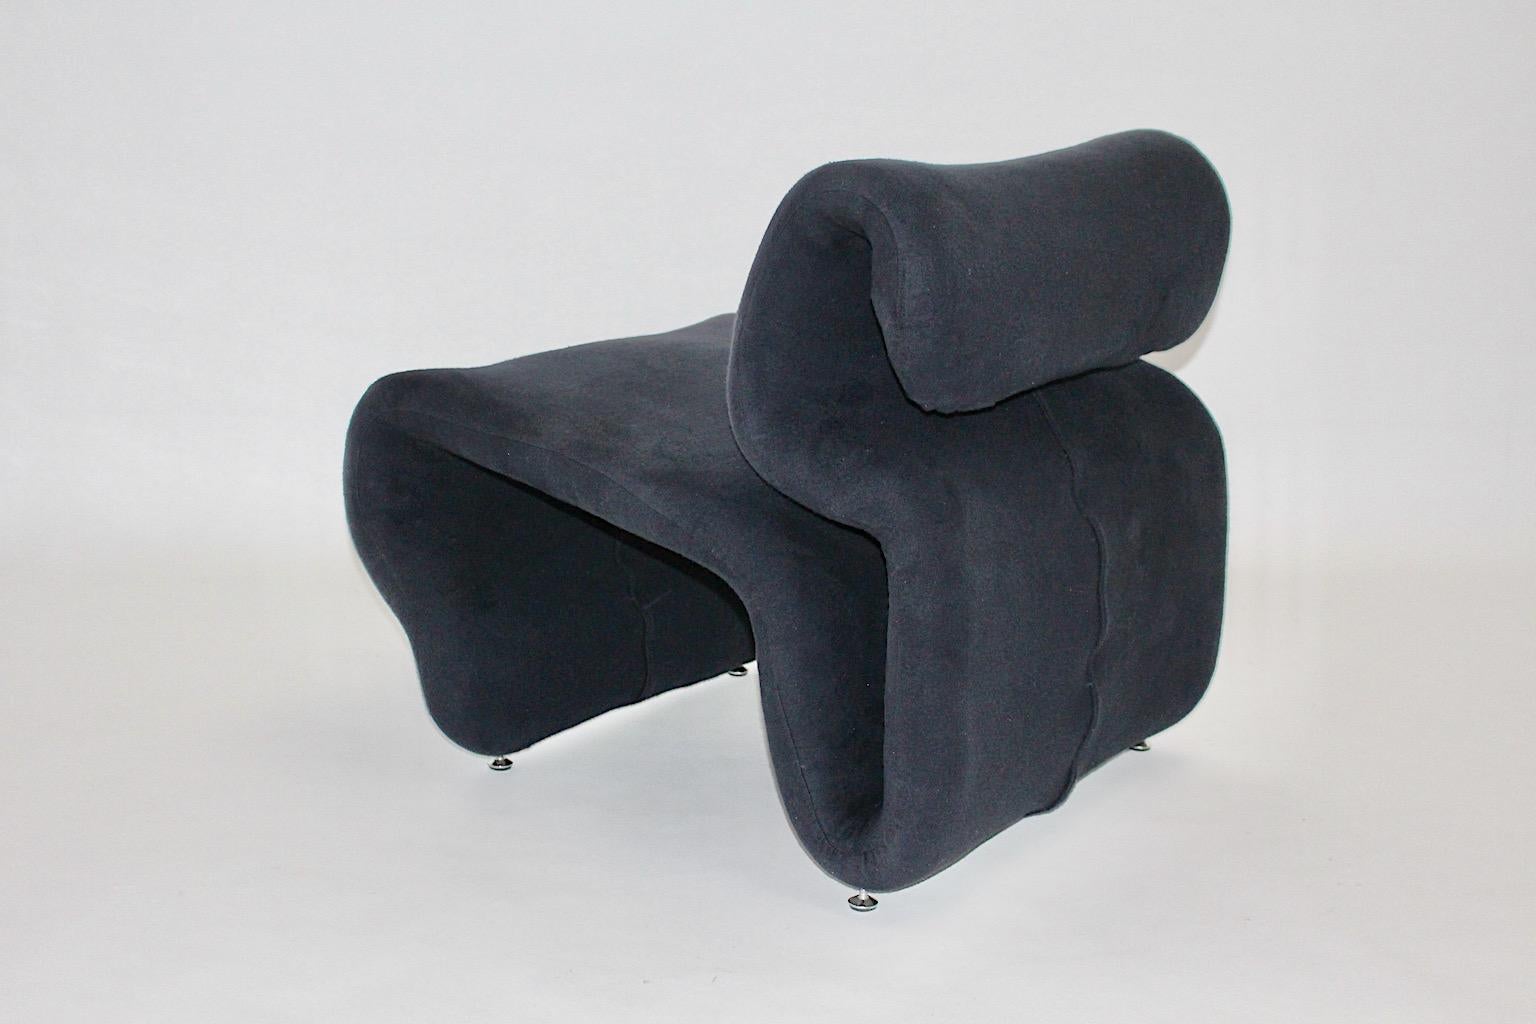 Sculptural Space Age Vintage Blue Lounge Chair Etcetera Jan Ekselius, 1970s For Sale 1